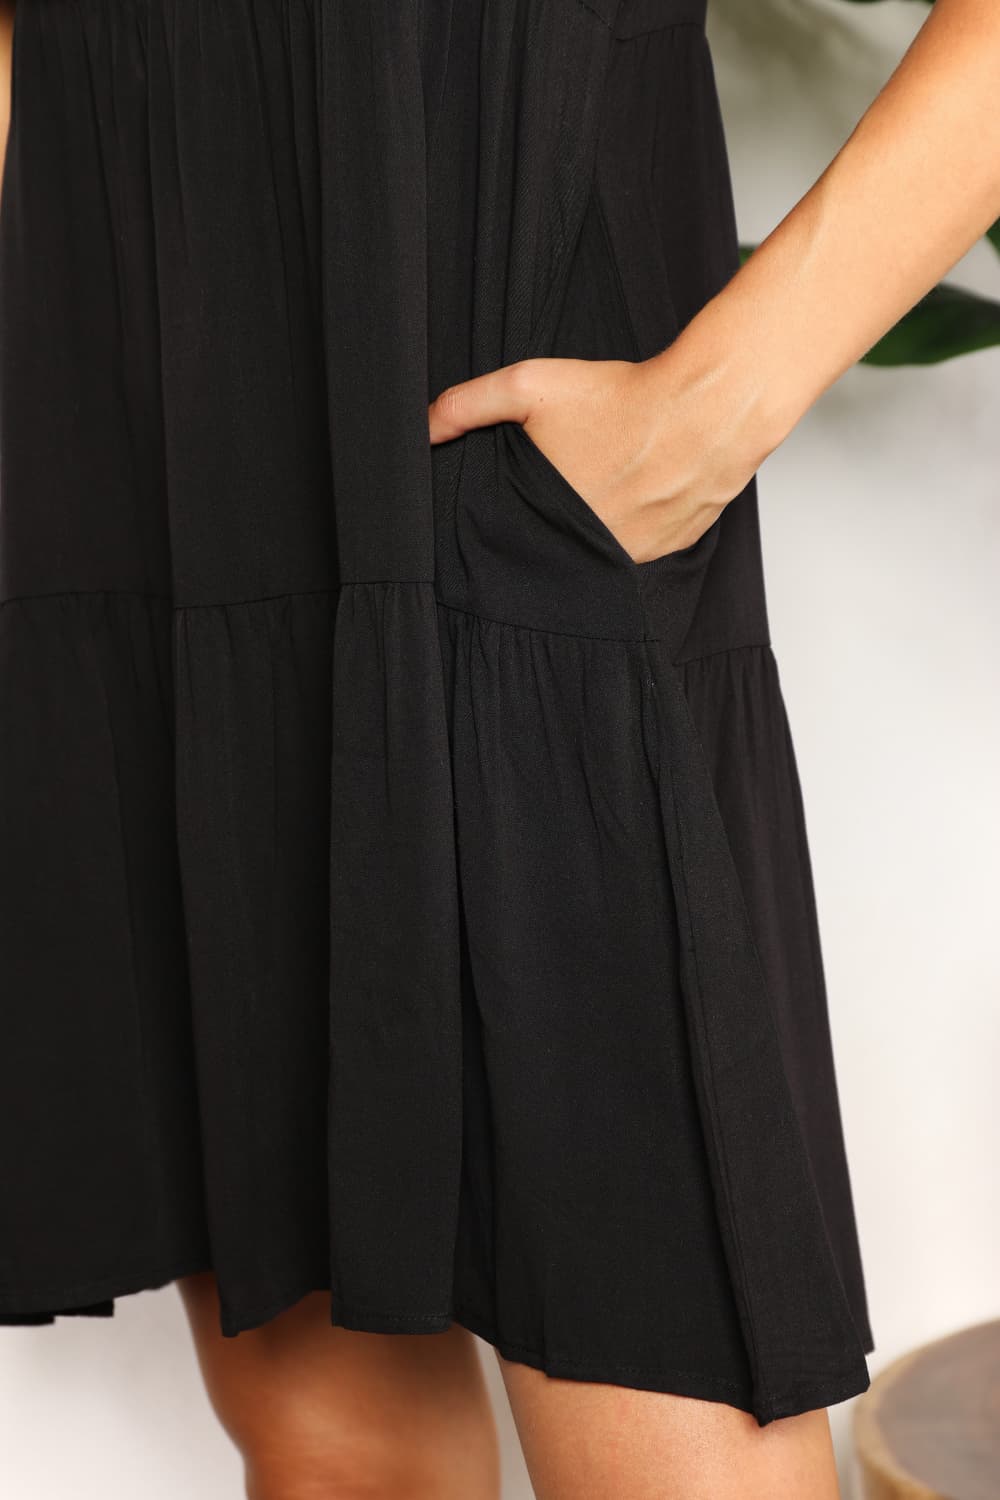 Double Take V-Neck Flounce Sleeve Tiered Dress - Everyday-Sales.com